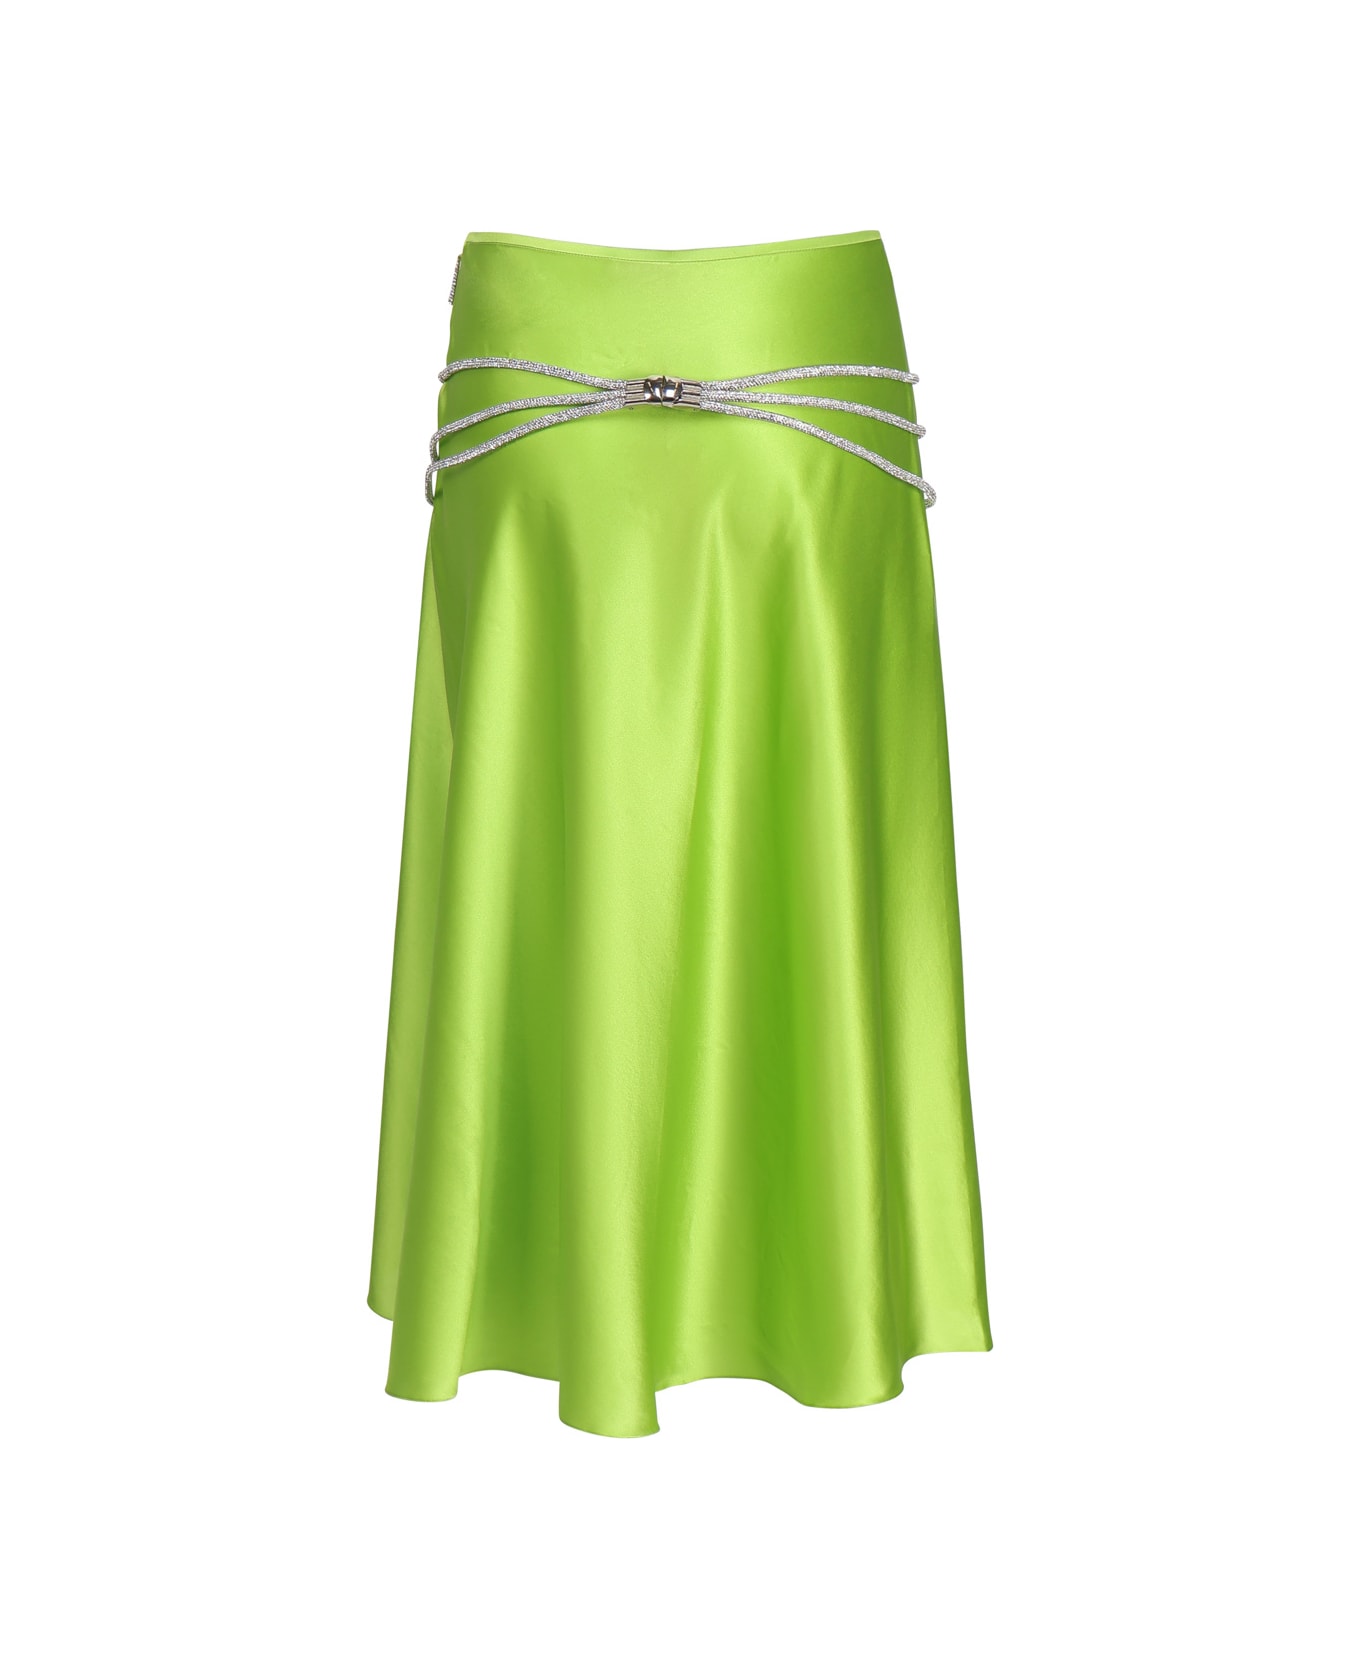 Nué Laetitia Skirt - Lime green